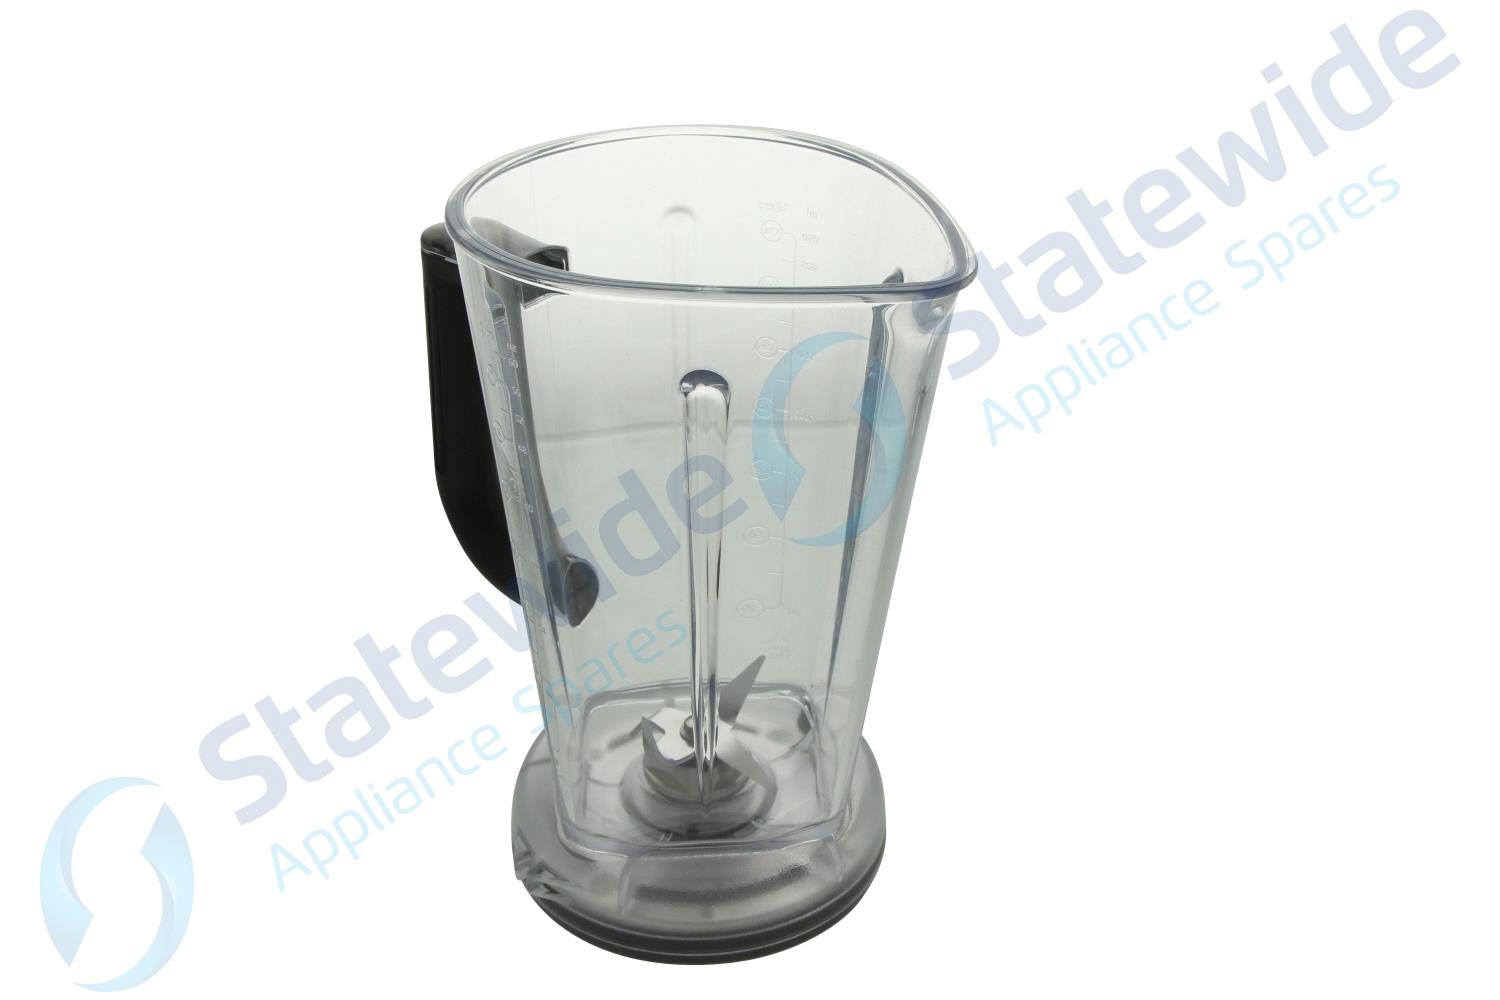 Blender Jar (replaces W10627688) W10861536 parts